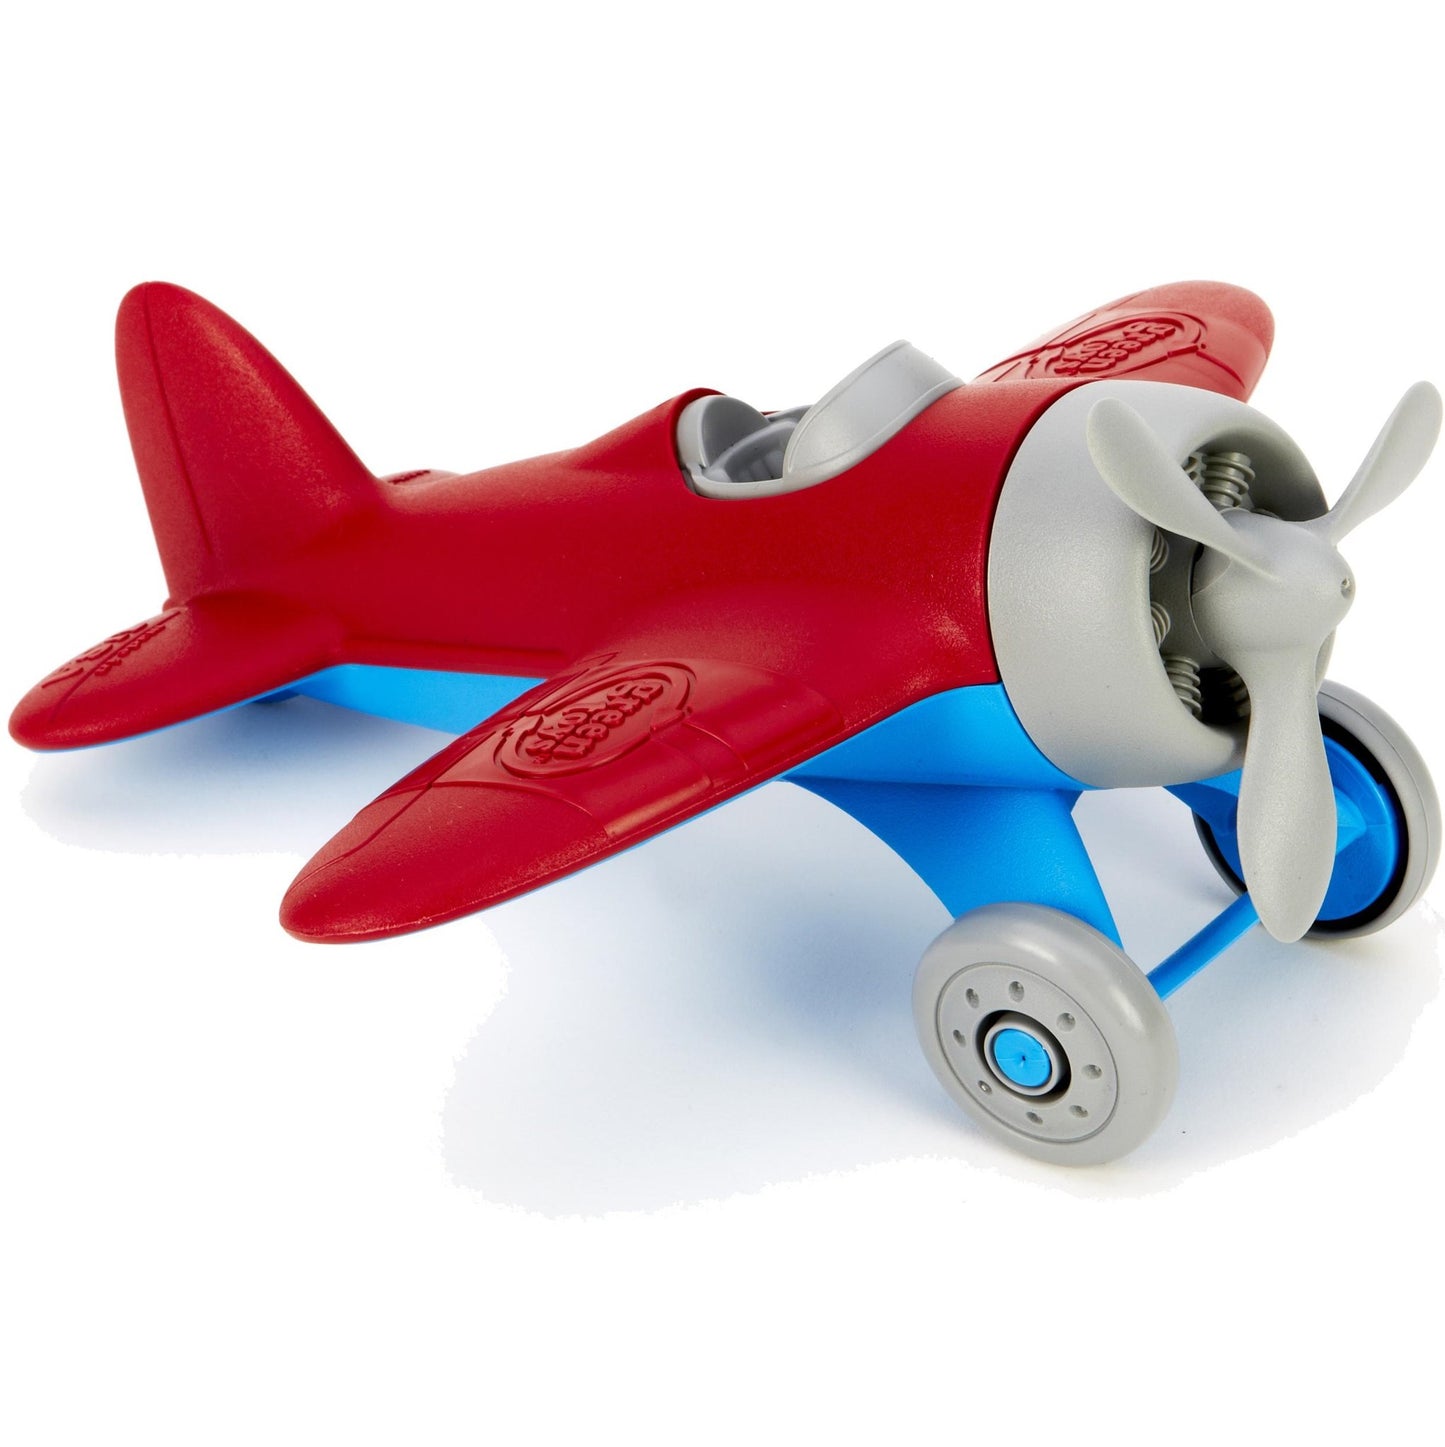 Green Toys - Airplane